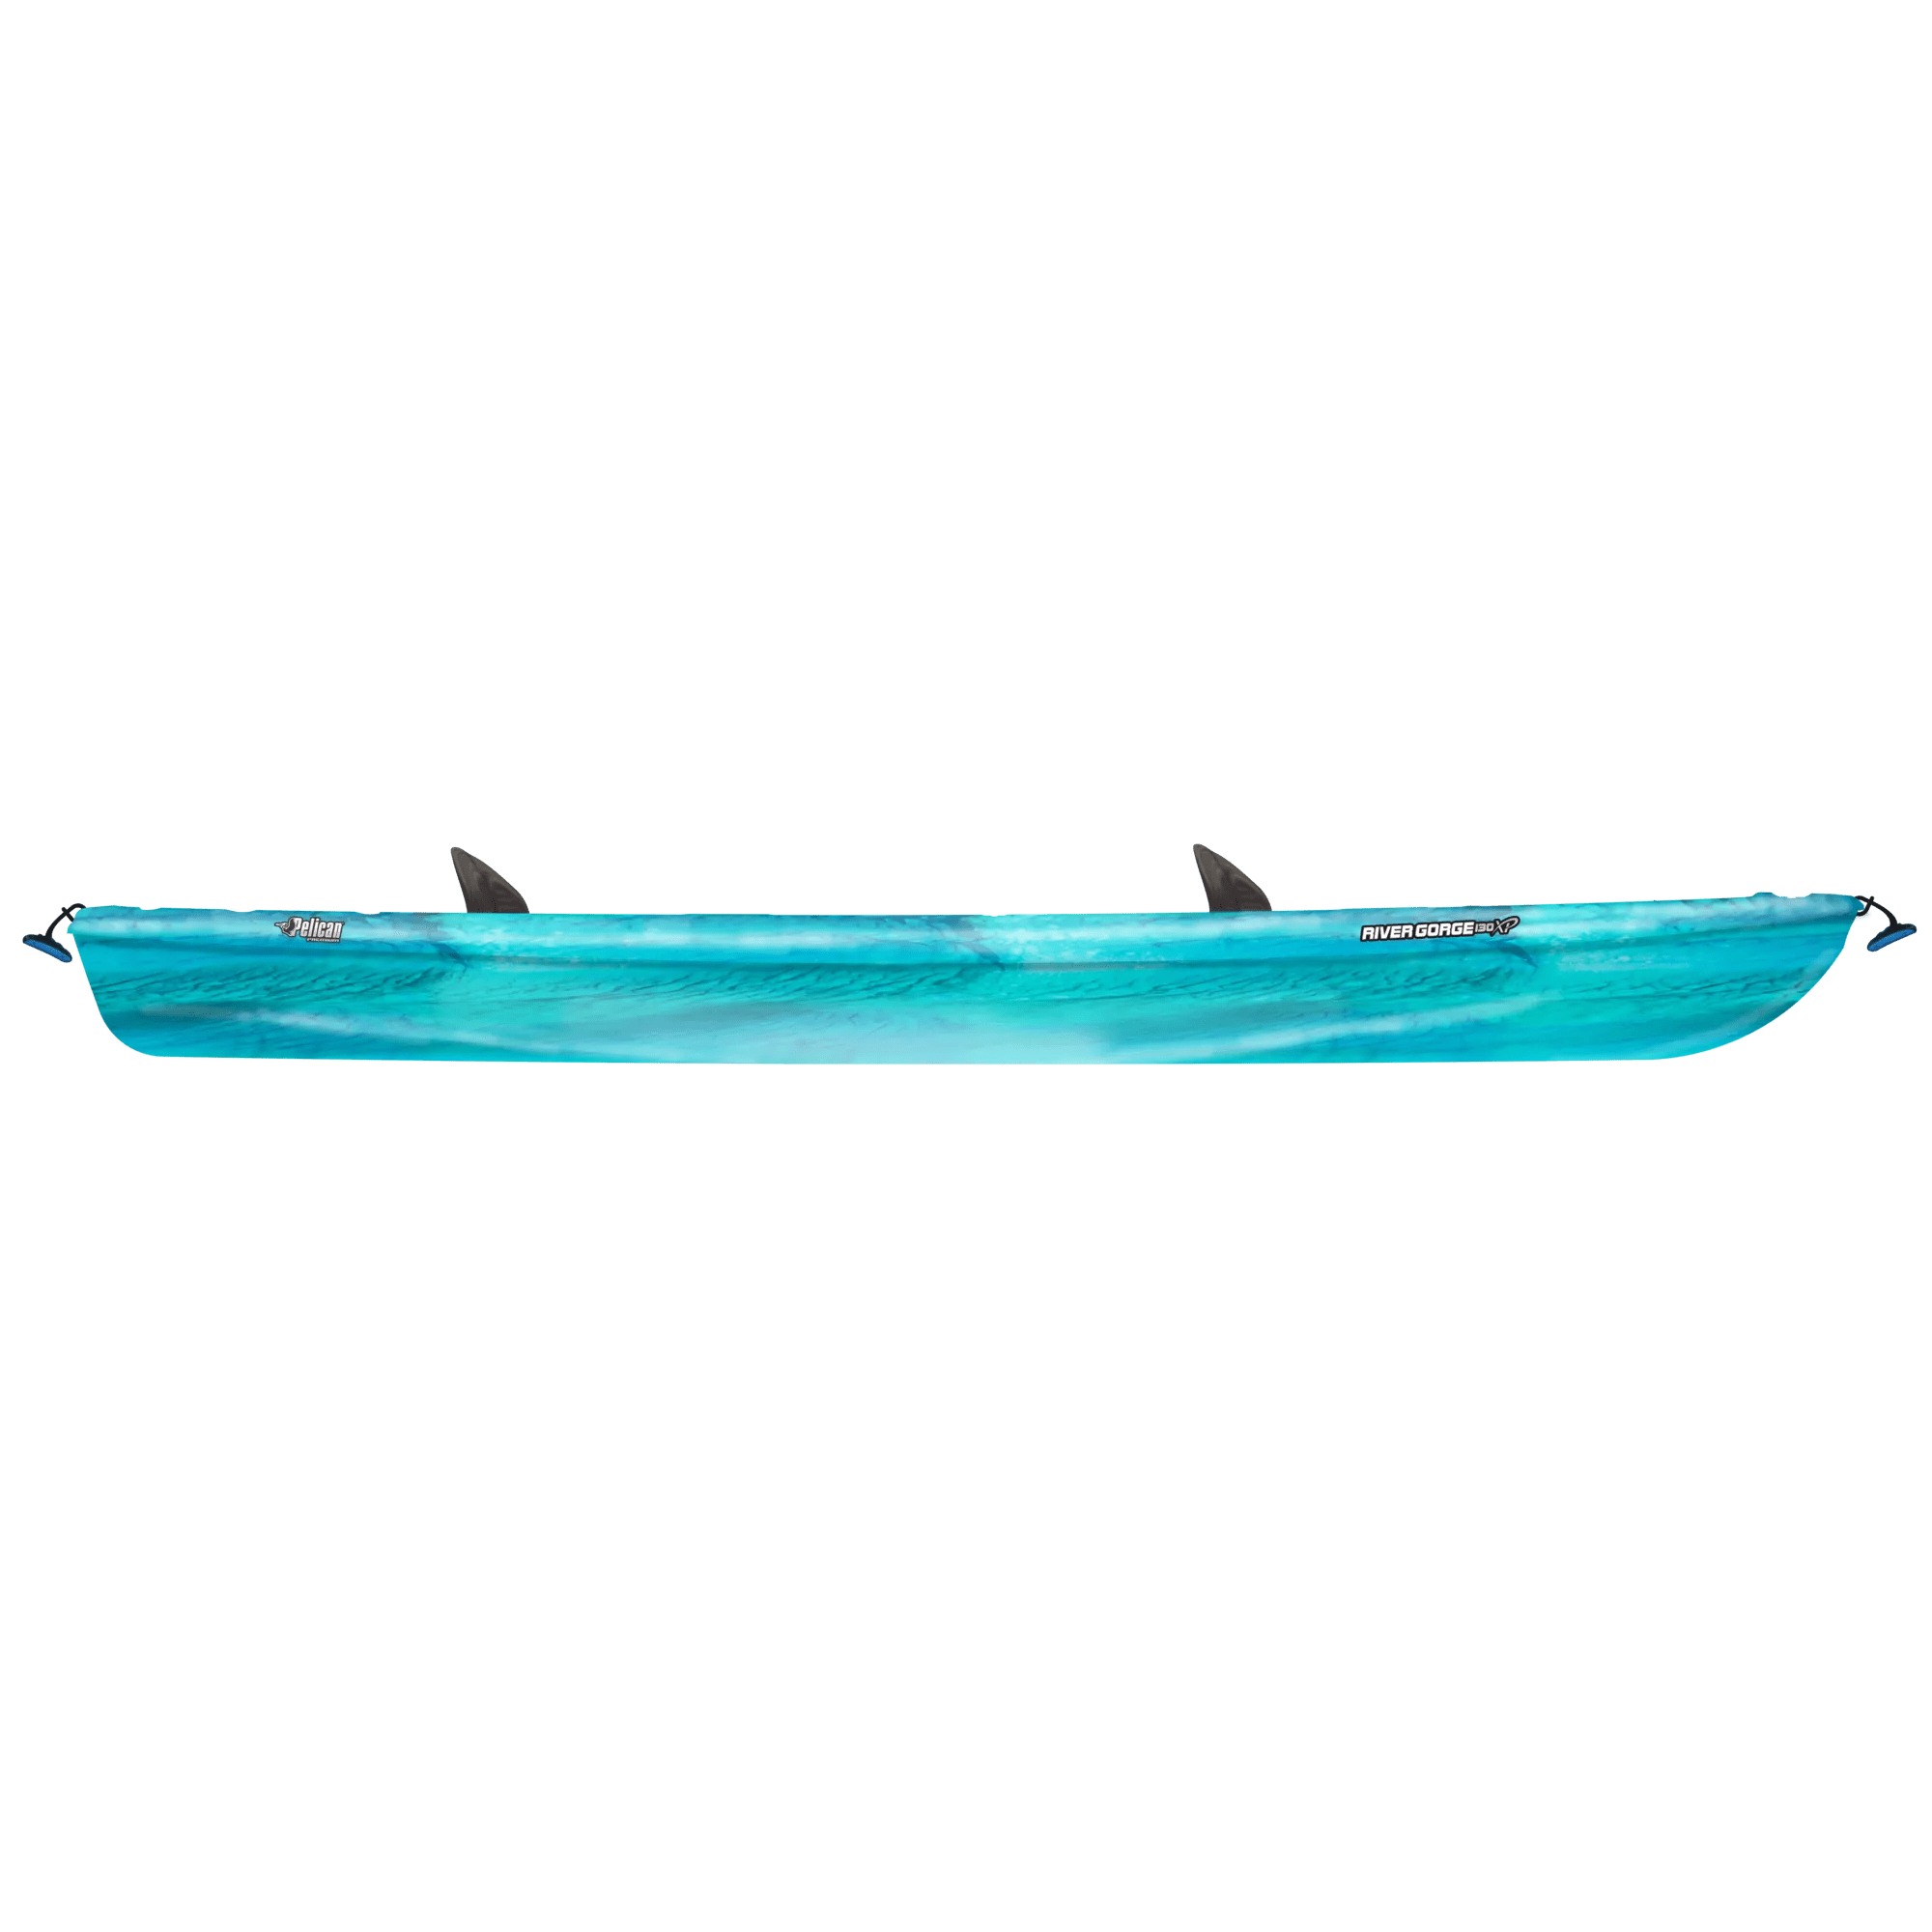 PELICAN - River Gorge 130XP Tandem Recreational Kayak - White - KUF13P200-00 - SIDE